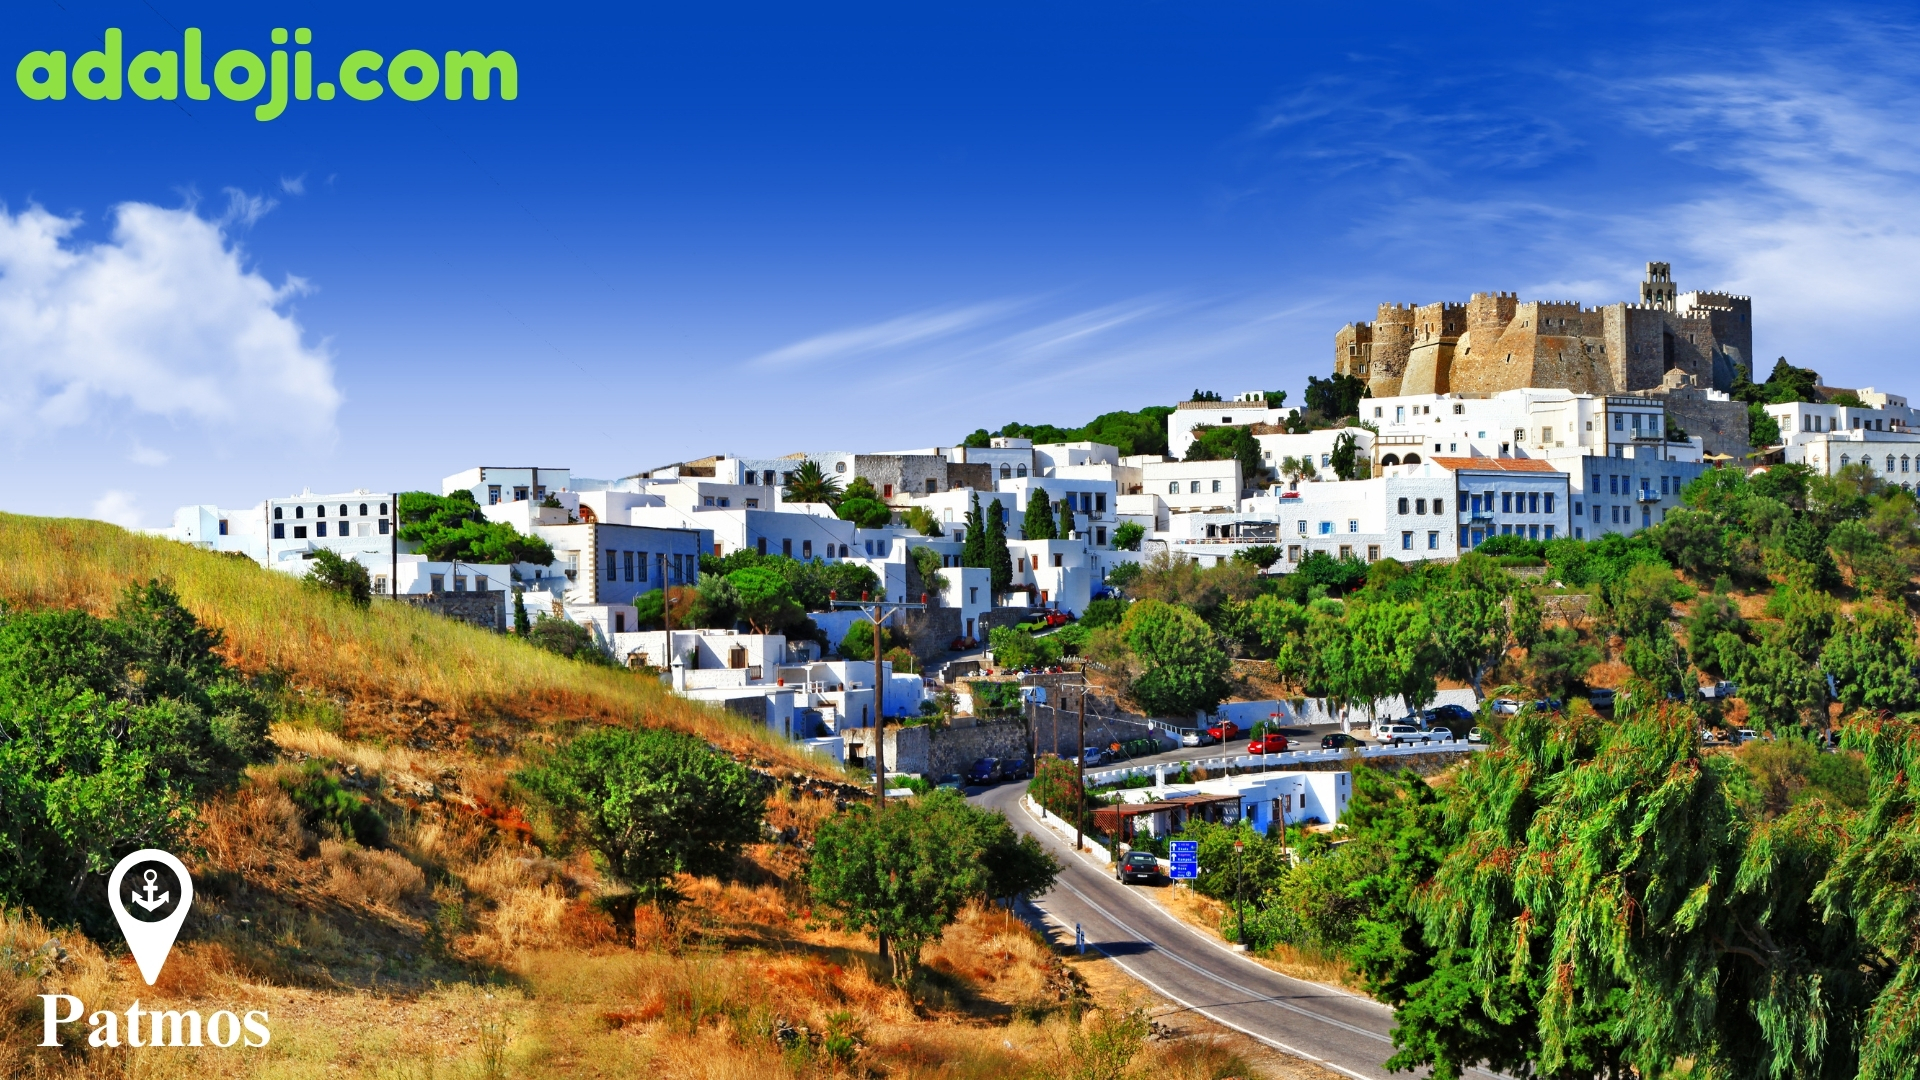 Patmos - Your Gateway to the Aegean Sea.